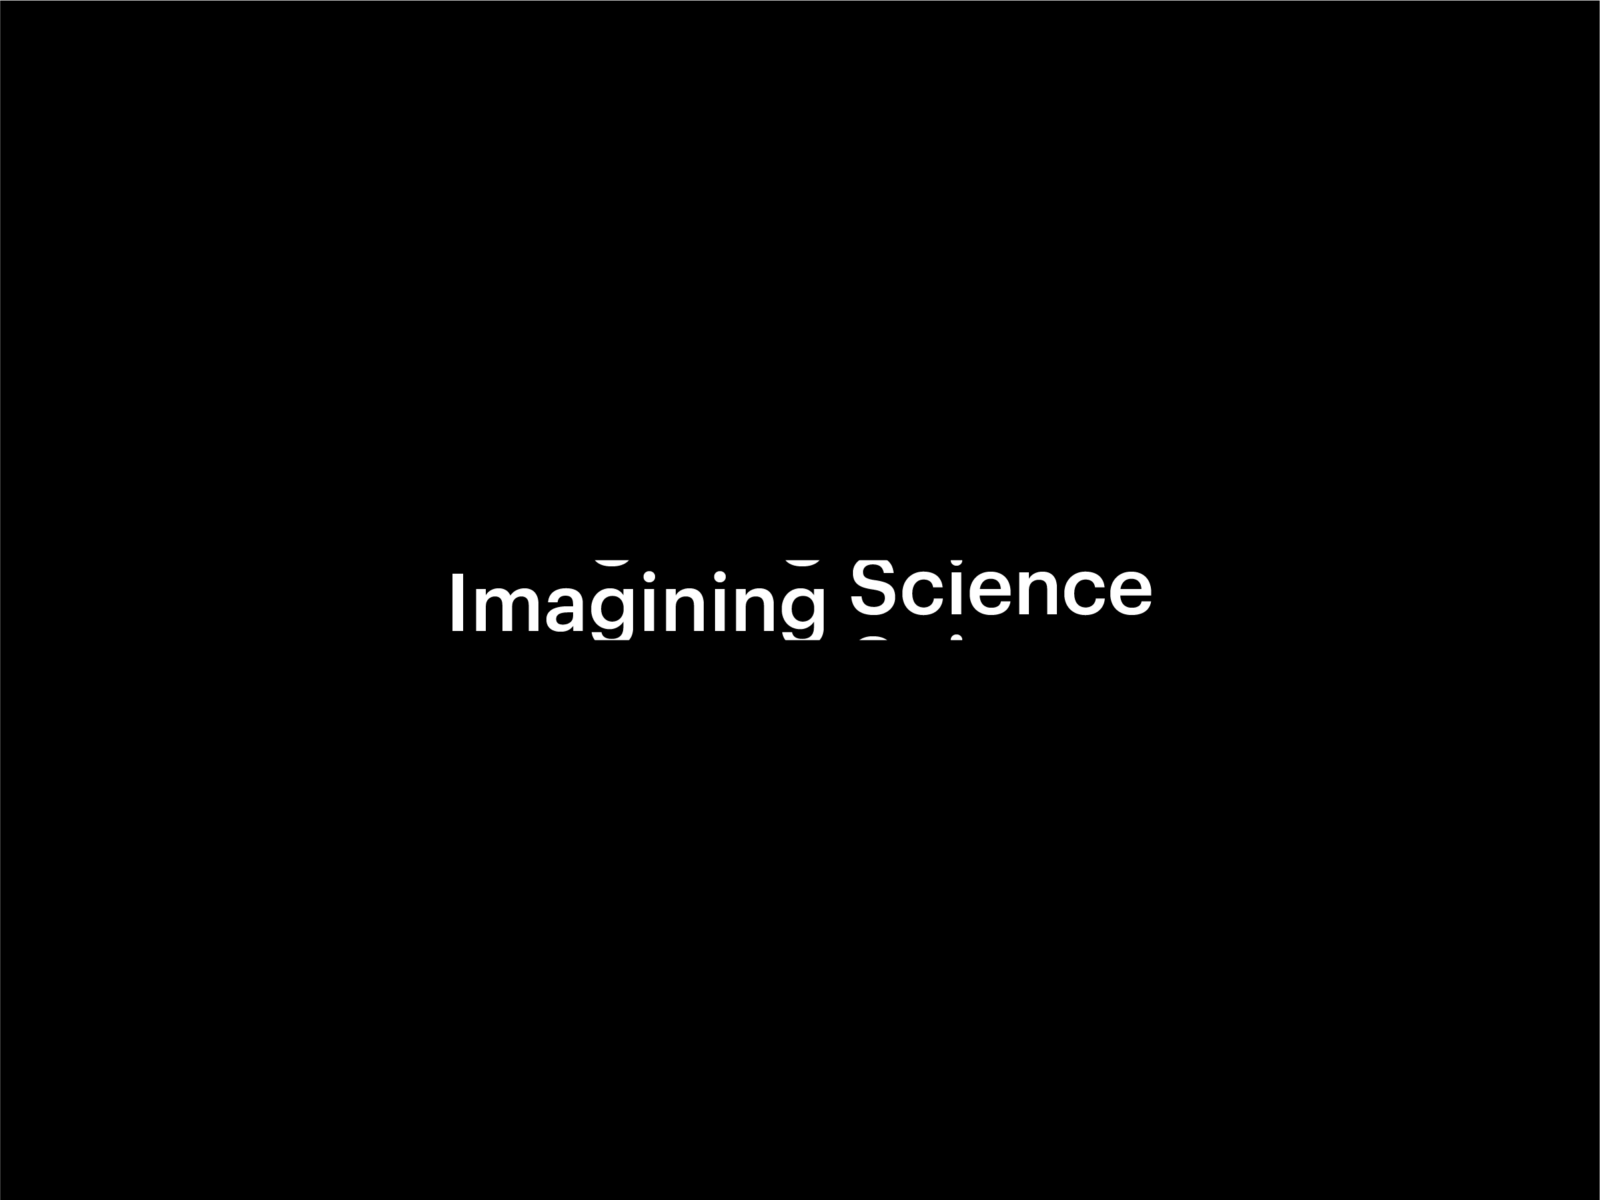 Imagining Science conceptual visual essay, single logotype